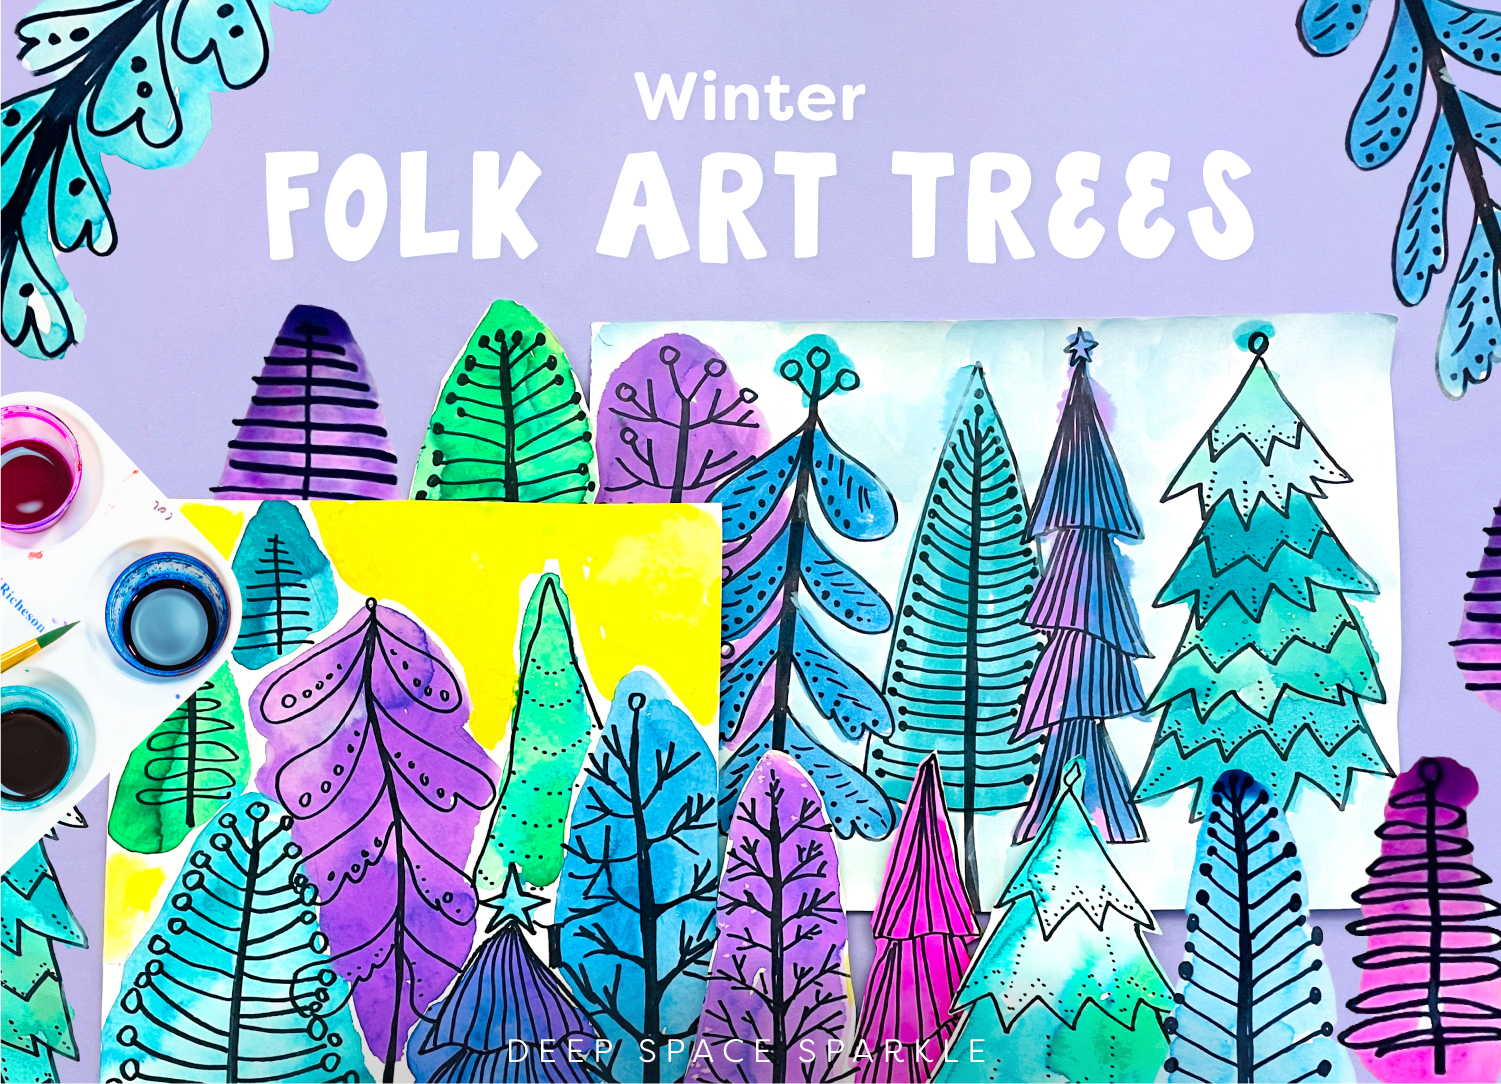 Winter Folk Art Trees